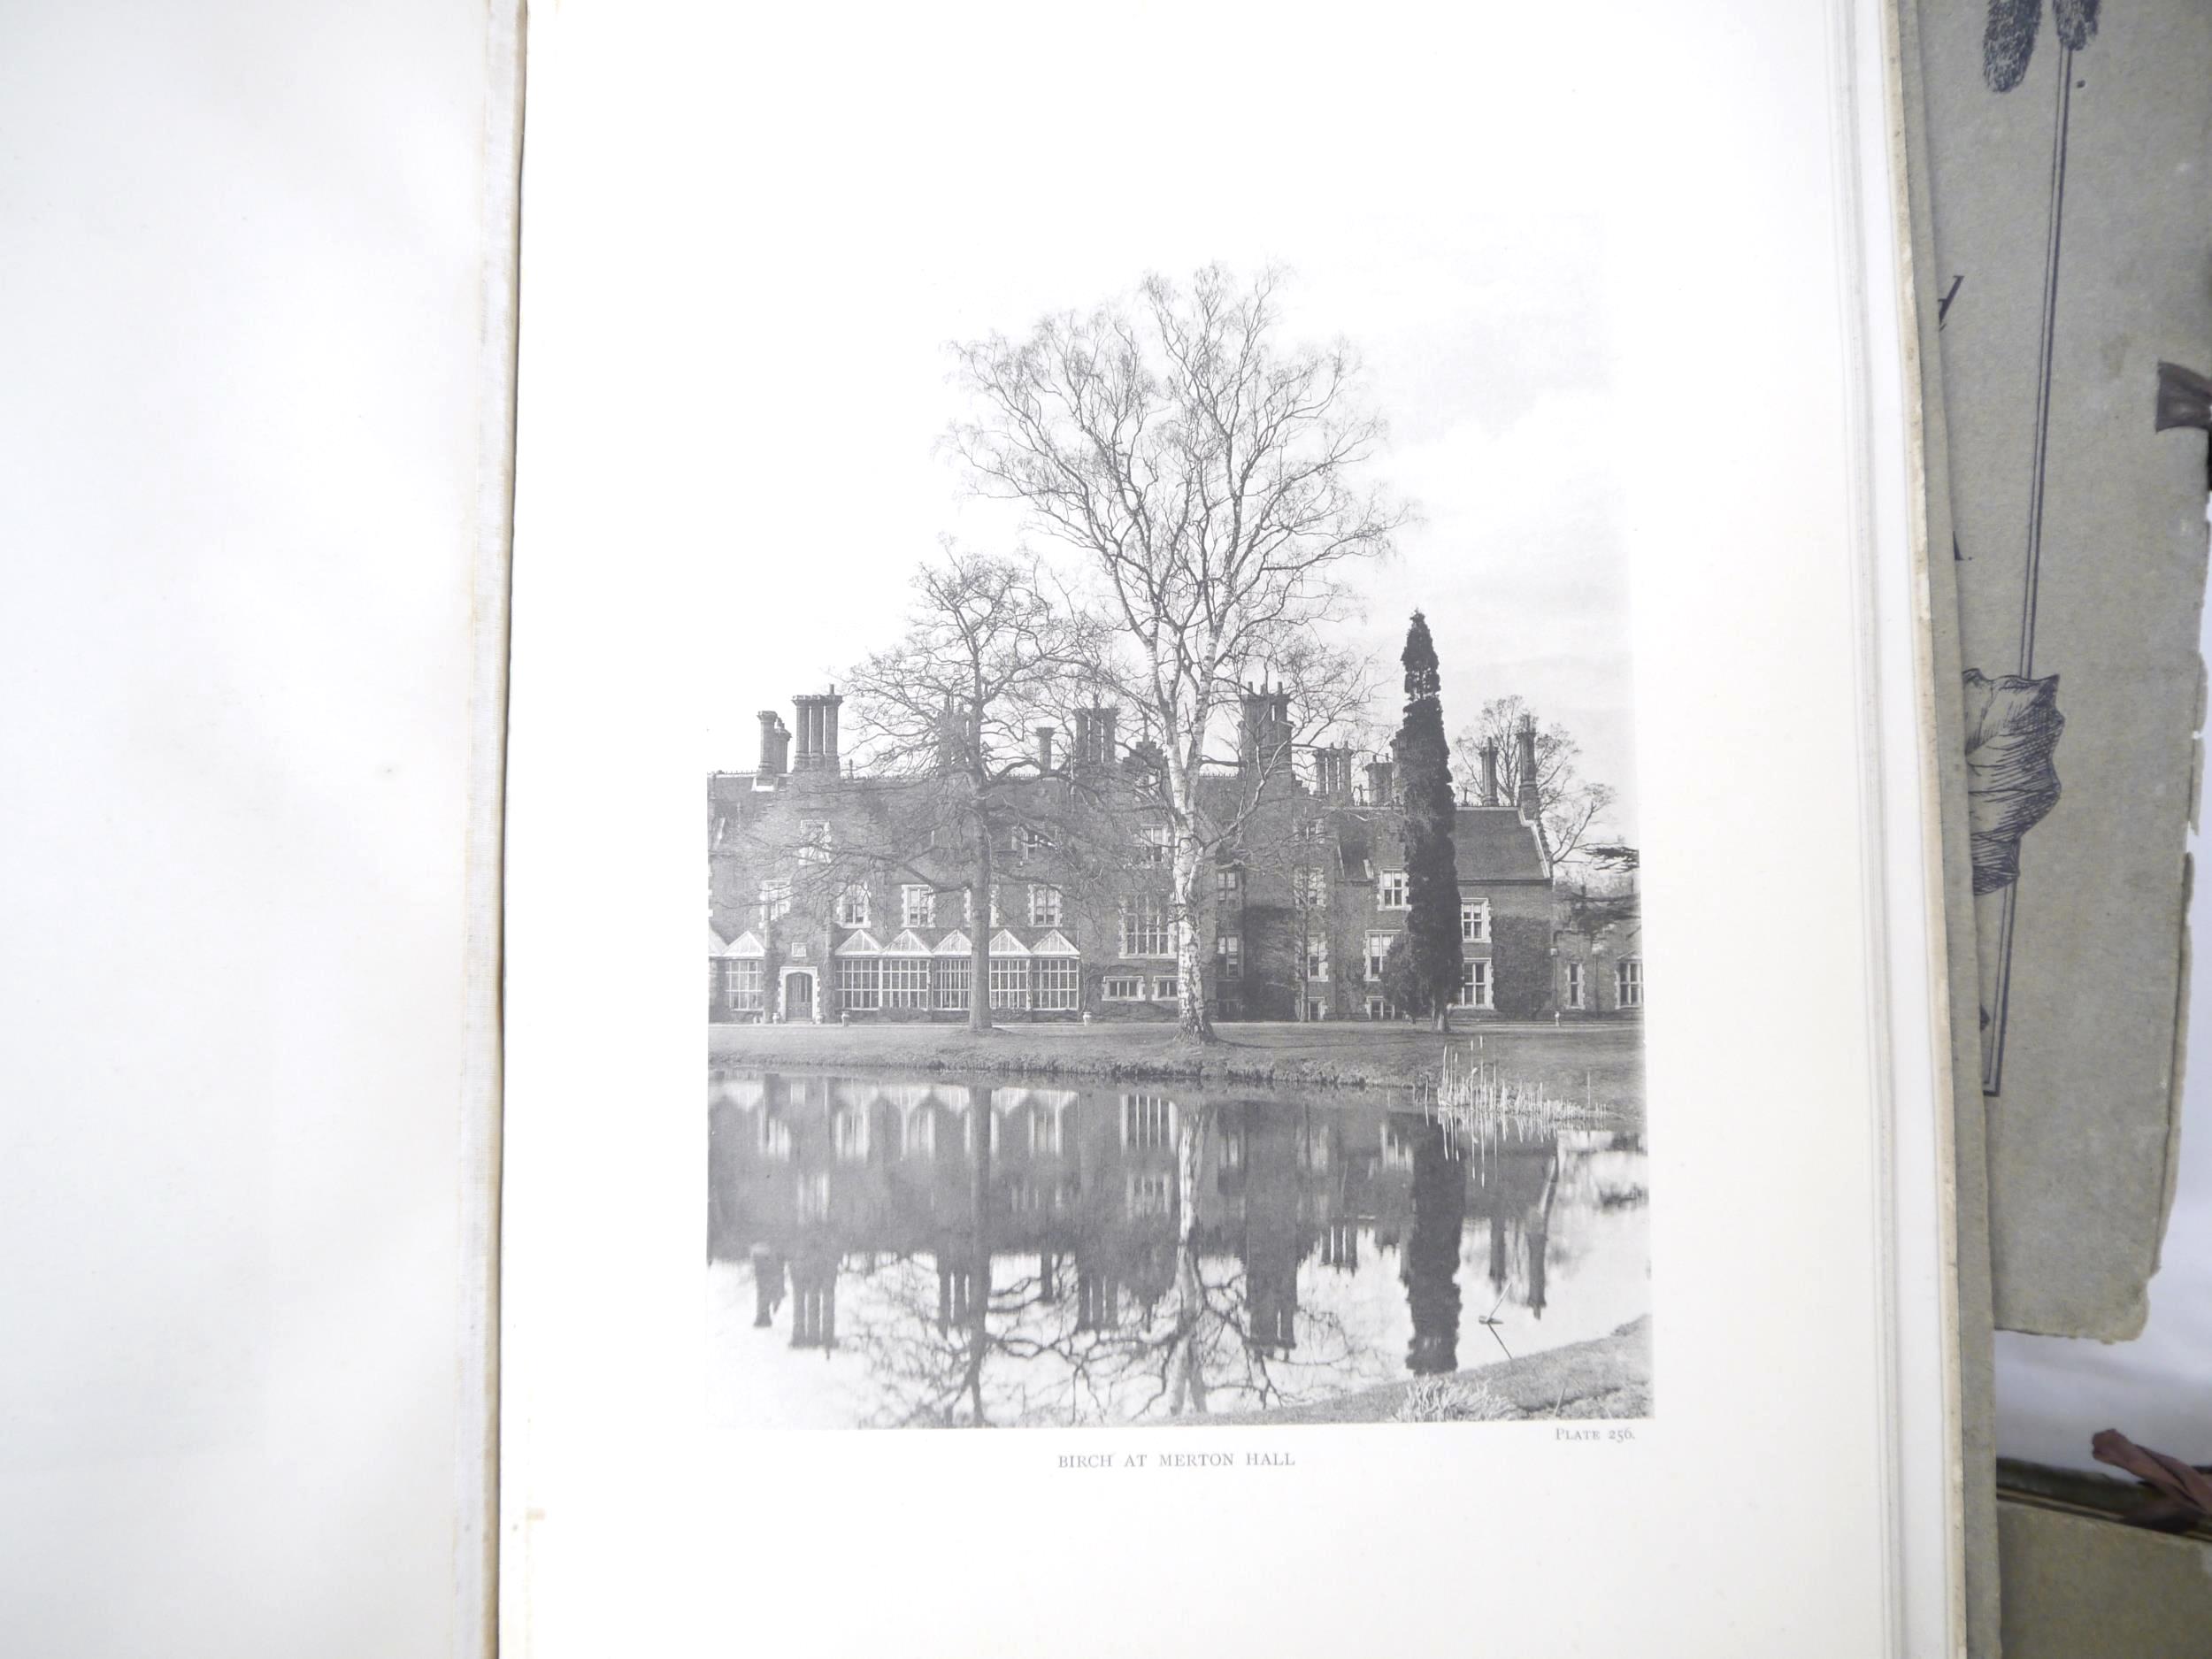 (Trees), Henry John Elwes & Augustine Henry: 'The Trees of Great Britain & Ireland', Edinburgh, - Image 25 of 41